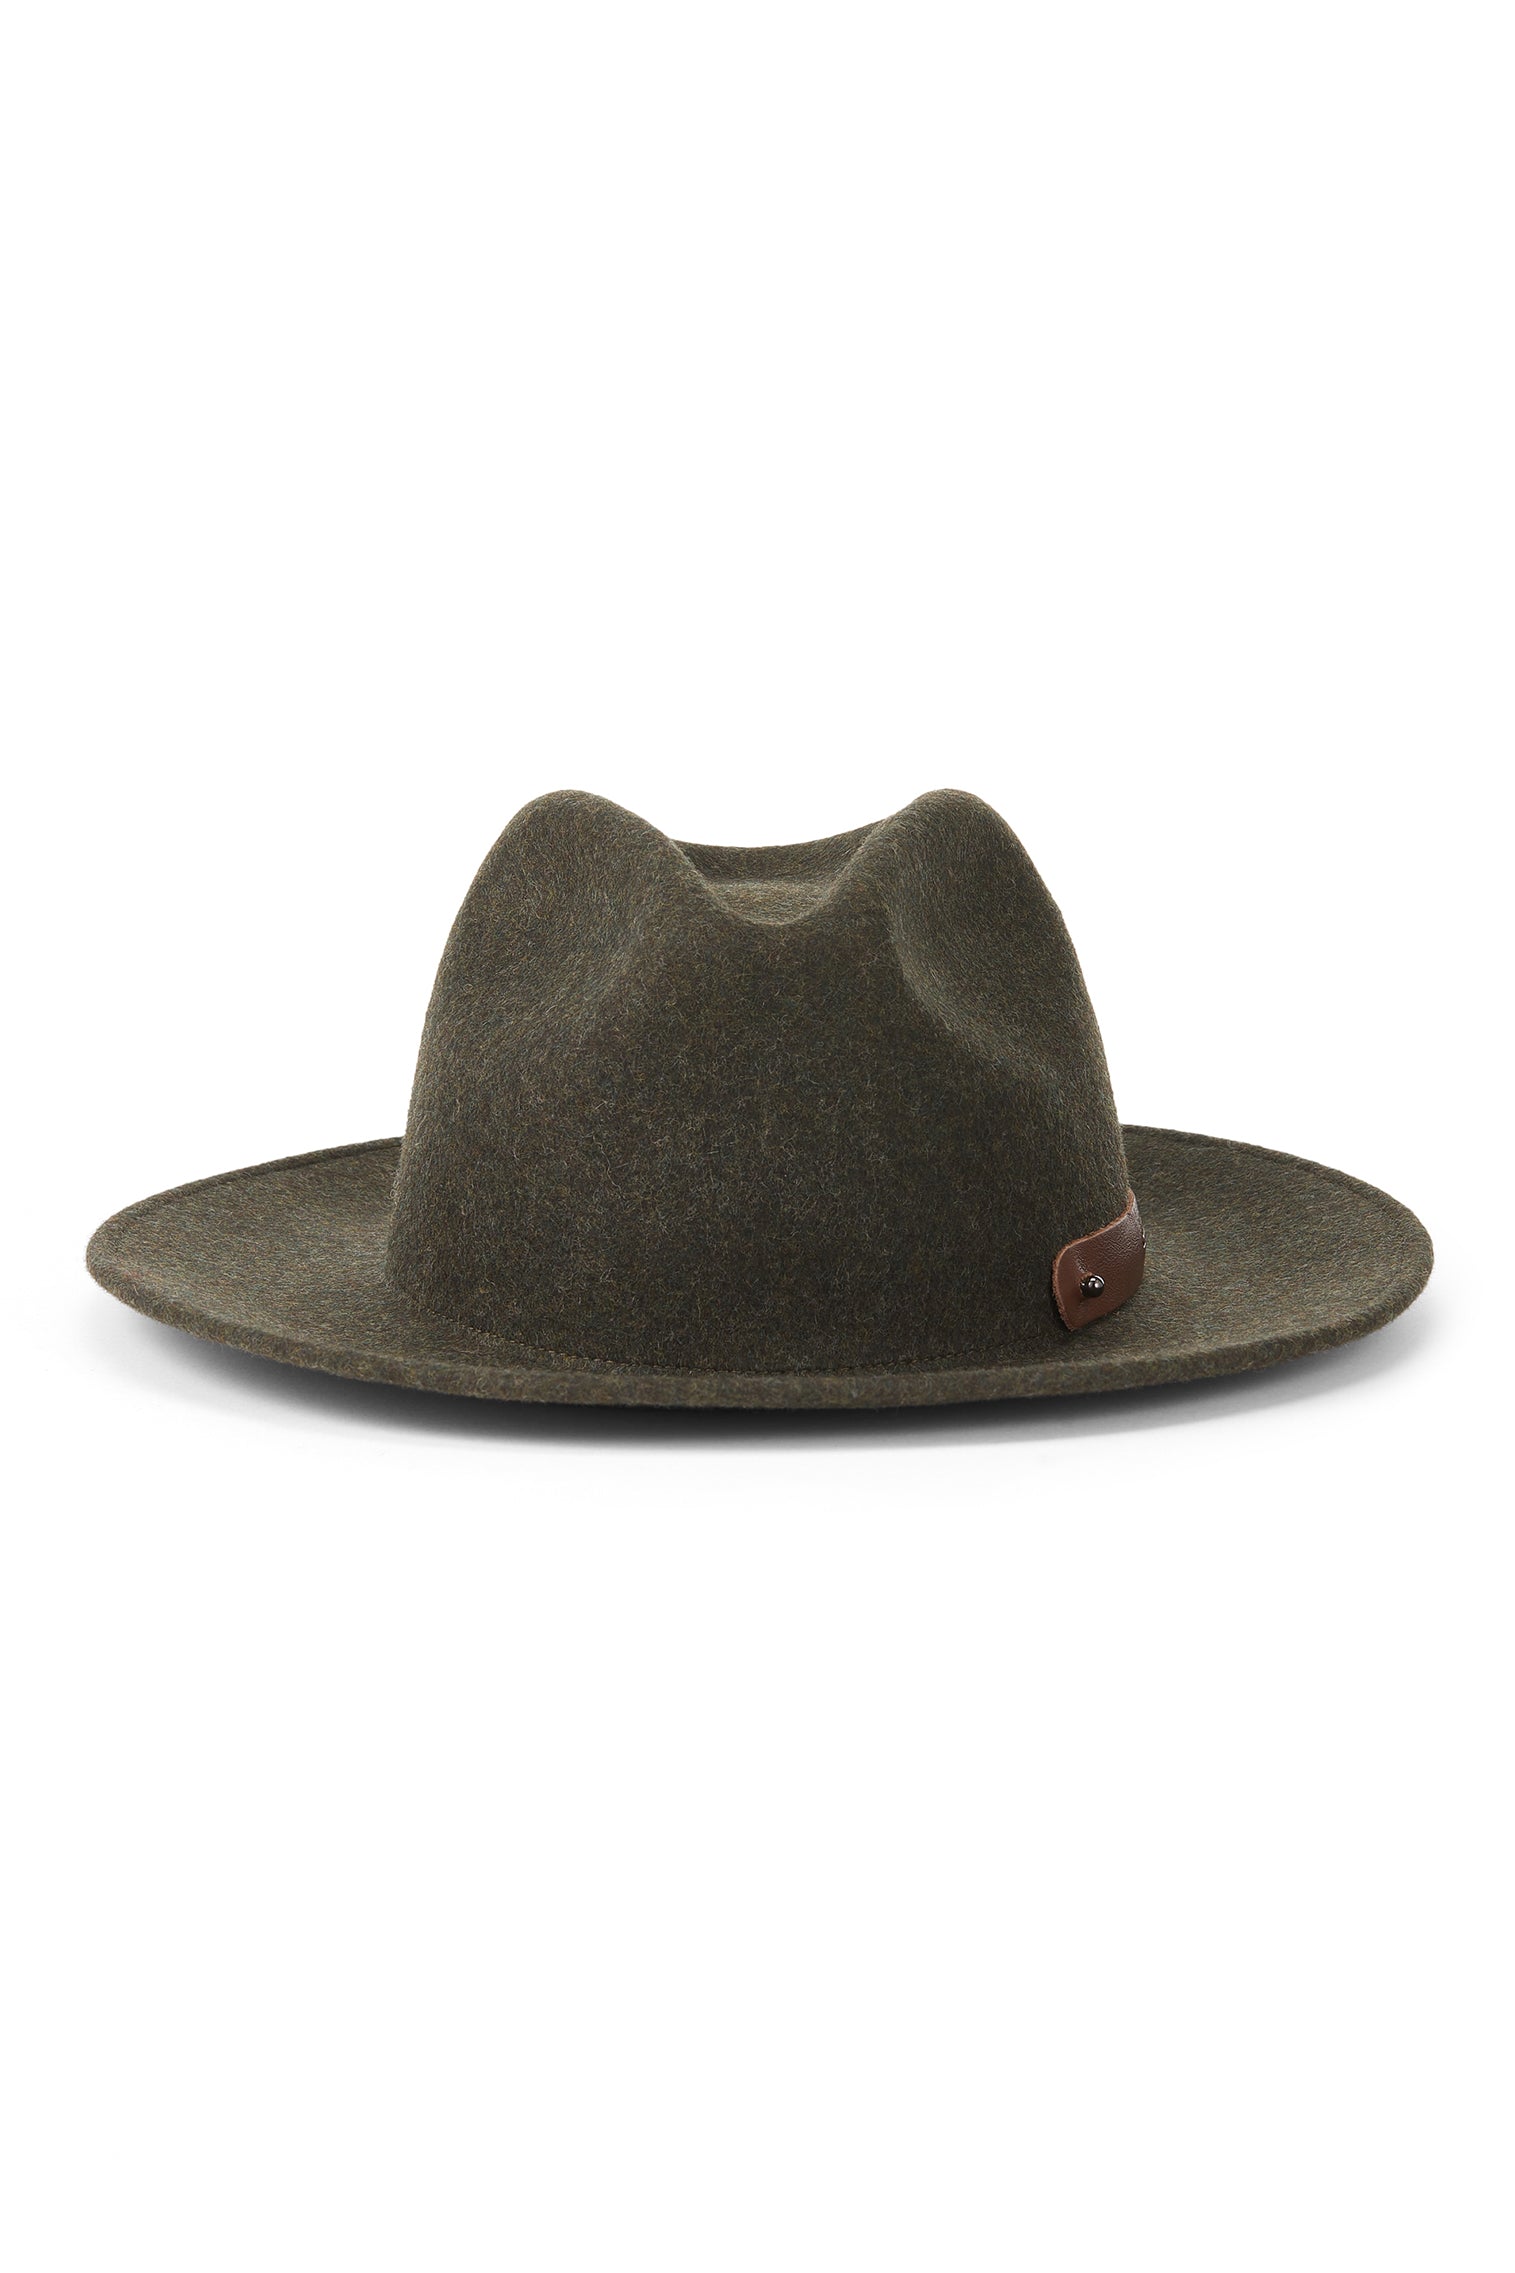 Cheltenham Rollable Trilby - Best Selling Hats - Lock & Co. Hatters London UK